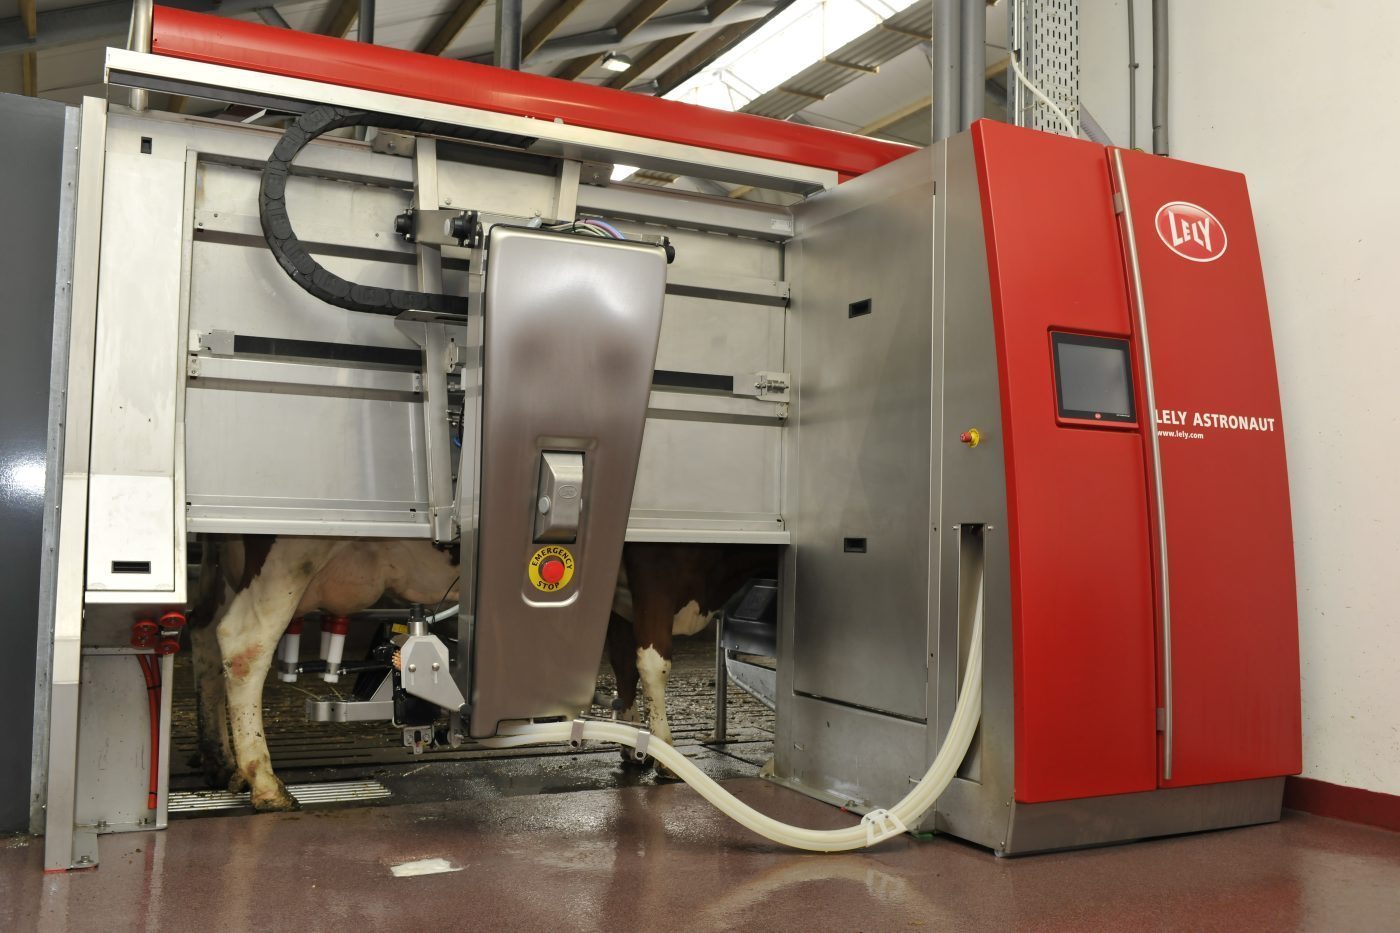 state-of-the-art automatic milking machine on an Irish dairy farm